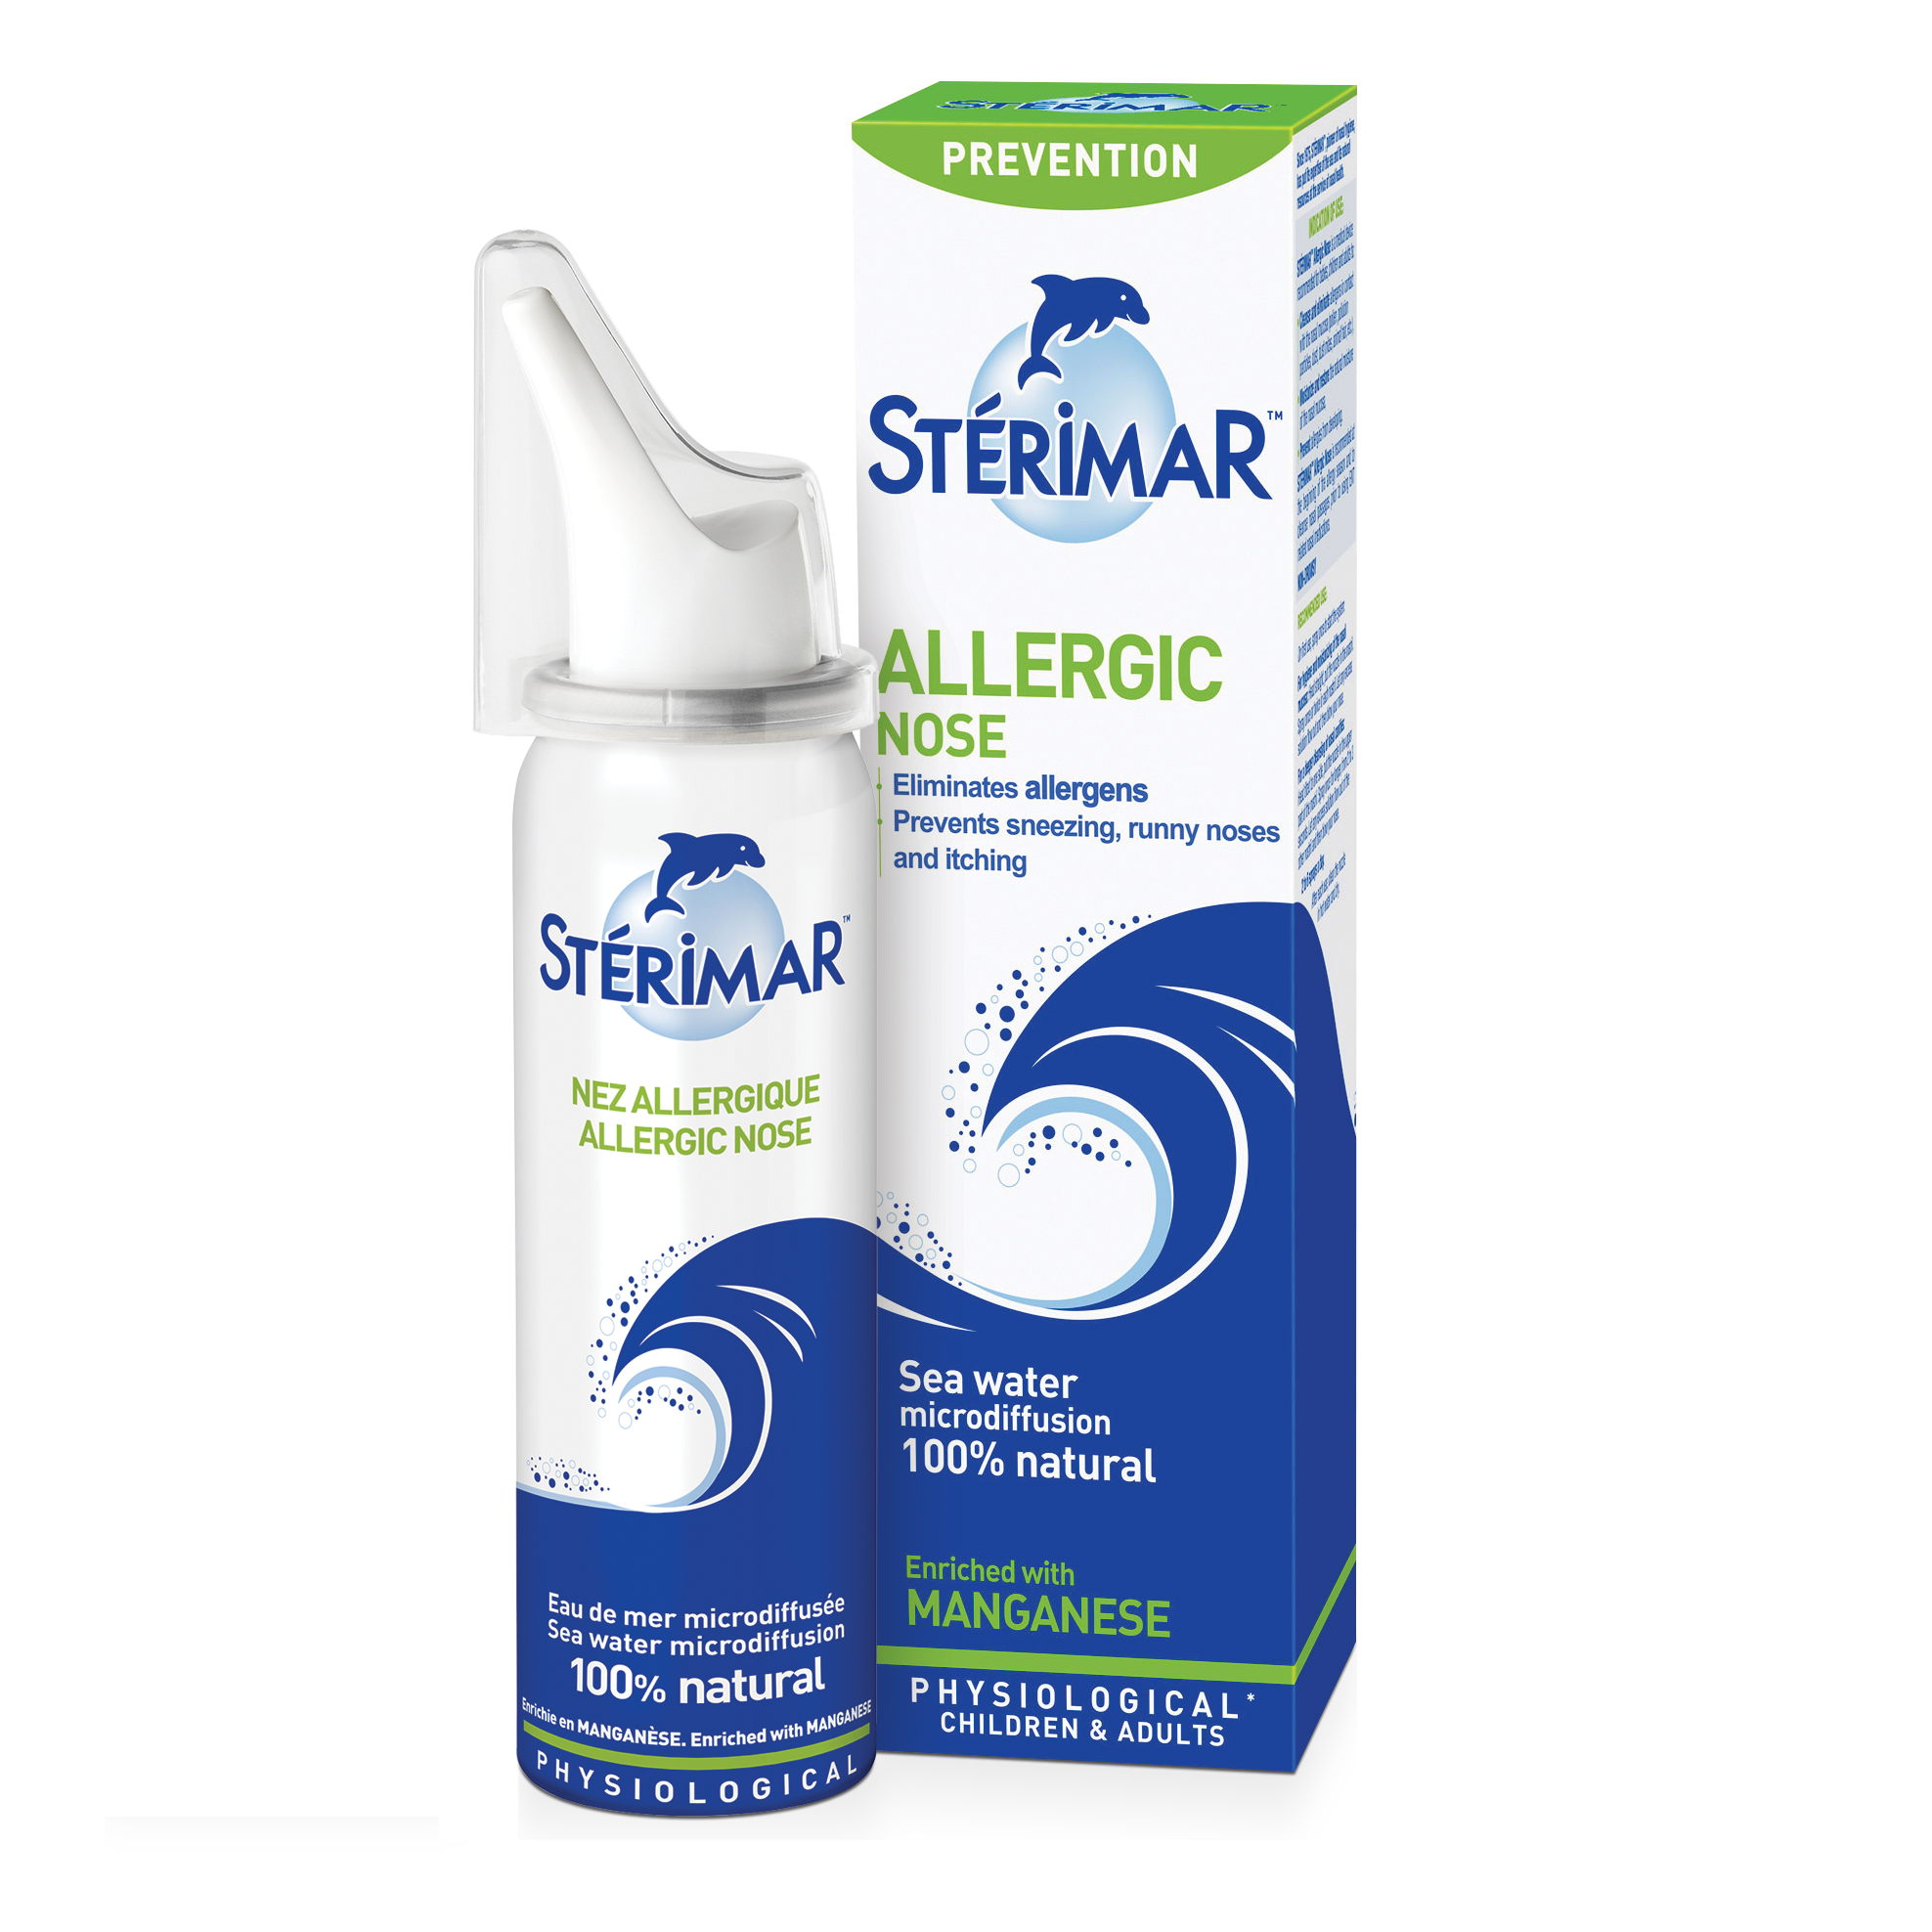 STERIMAR ALLERGIC NOSE Dung dịch xịt vệ sinh mũi ngăn ngừa dị ứng